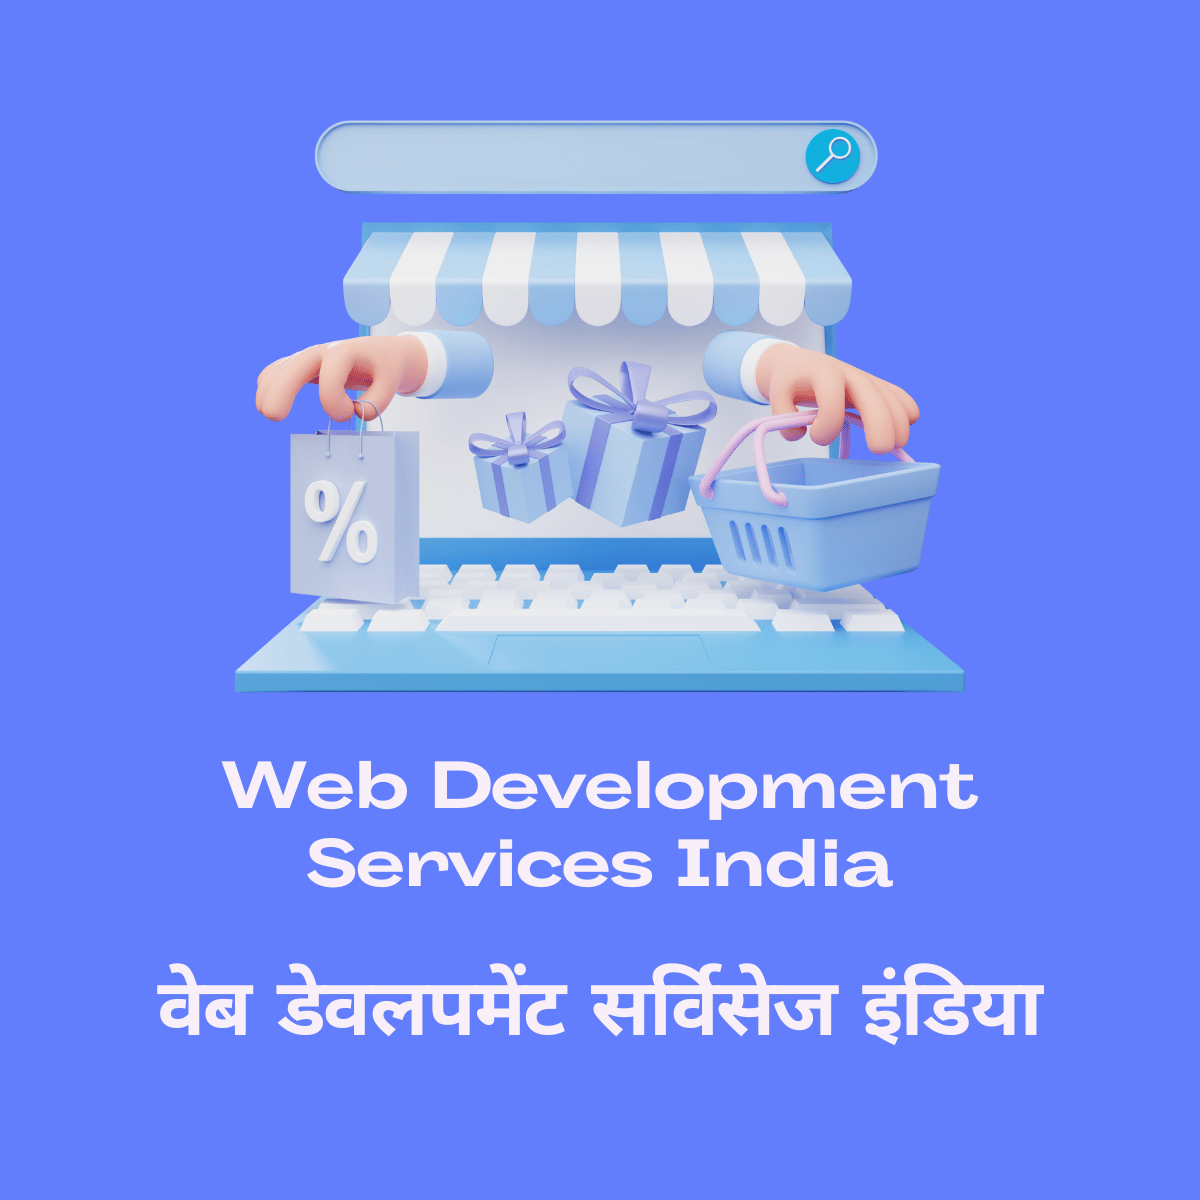 Web Development Services India वेब डेवलपमेंट सर्विसेज इंडिया